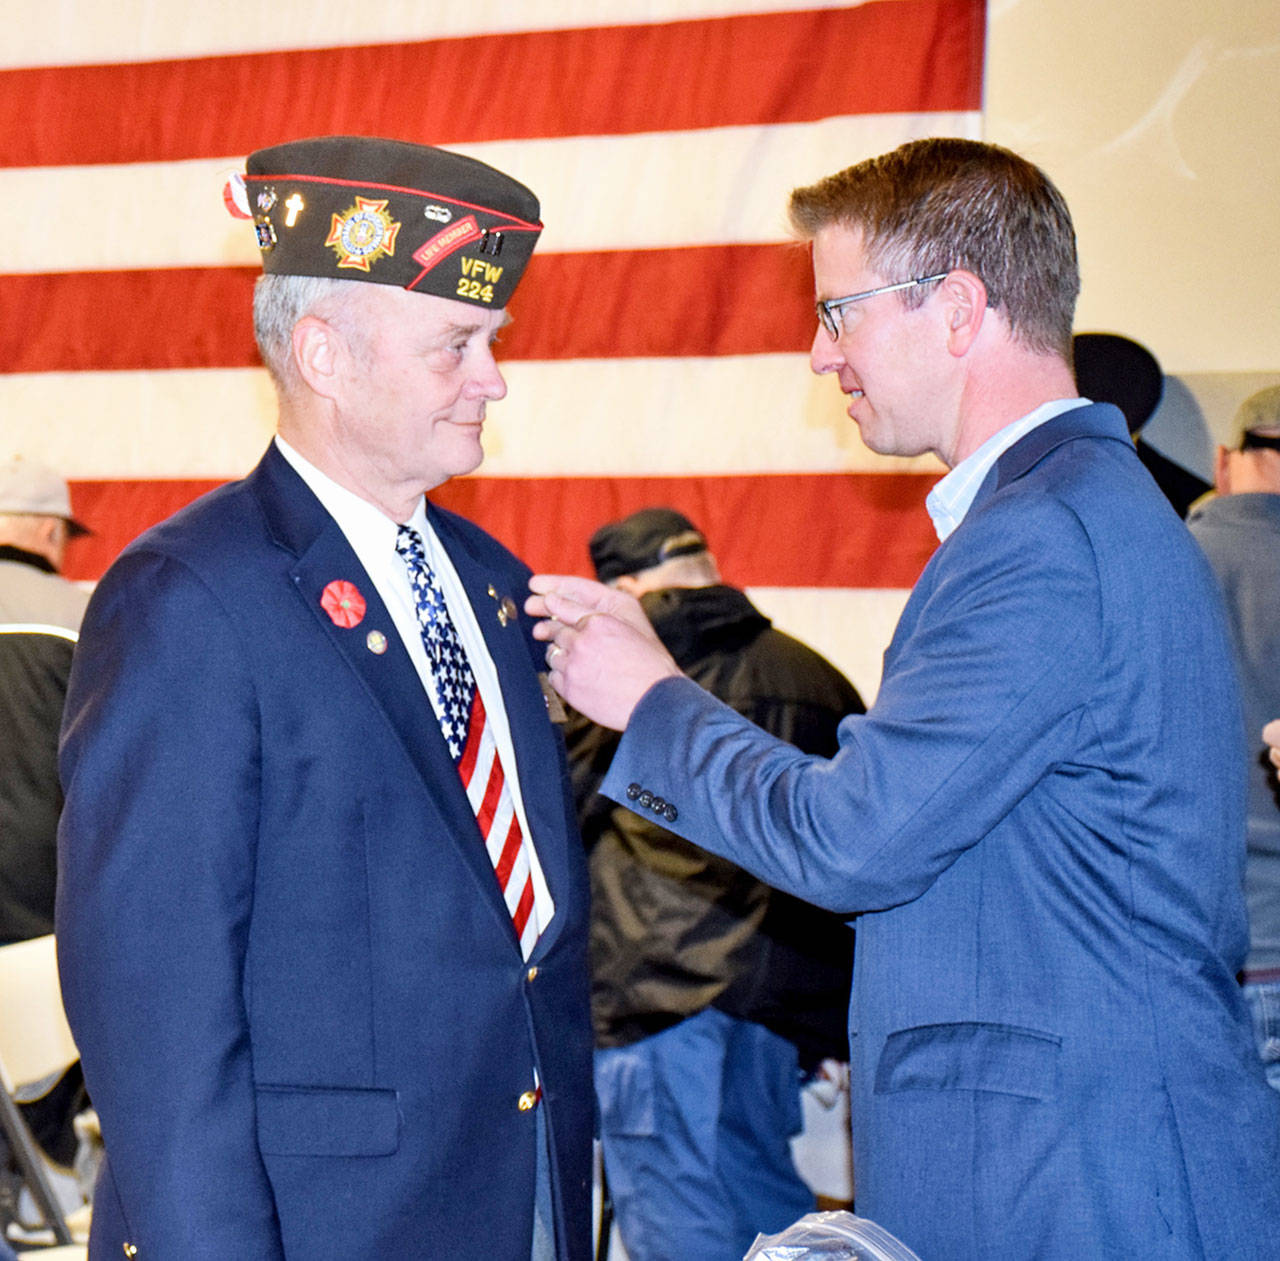 Rep. Kilmer honors Vietnam vets in Ocean Shores ceremony